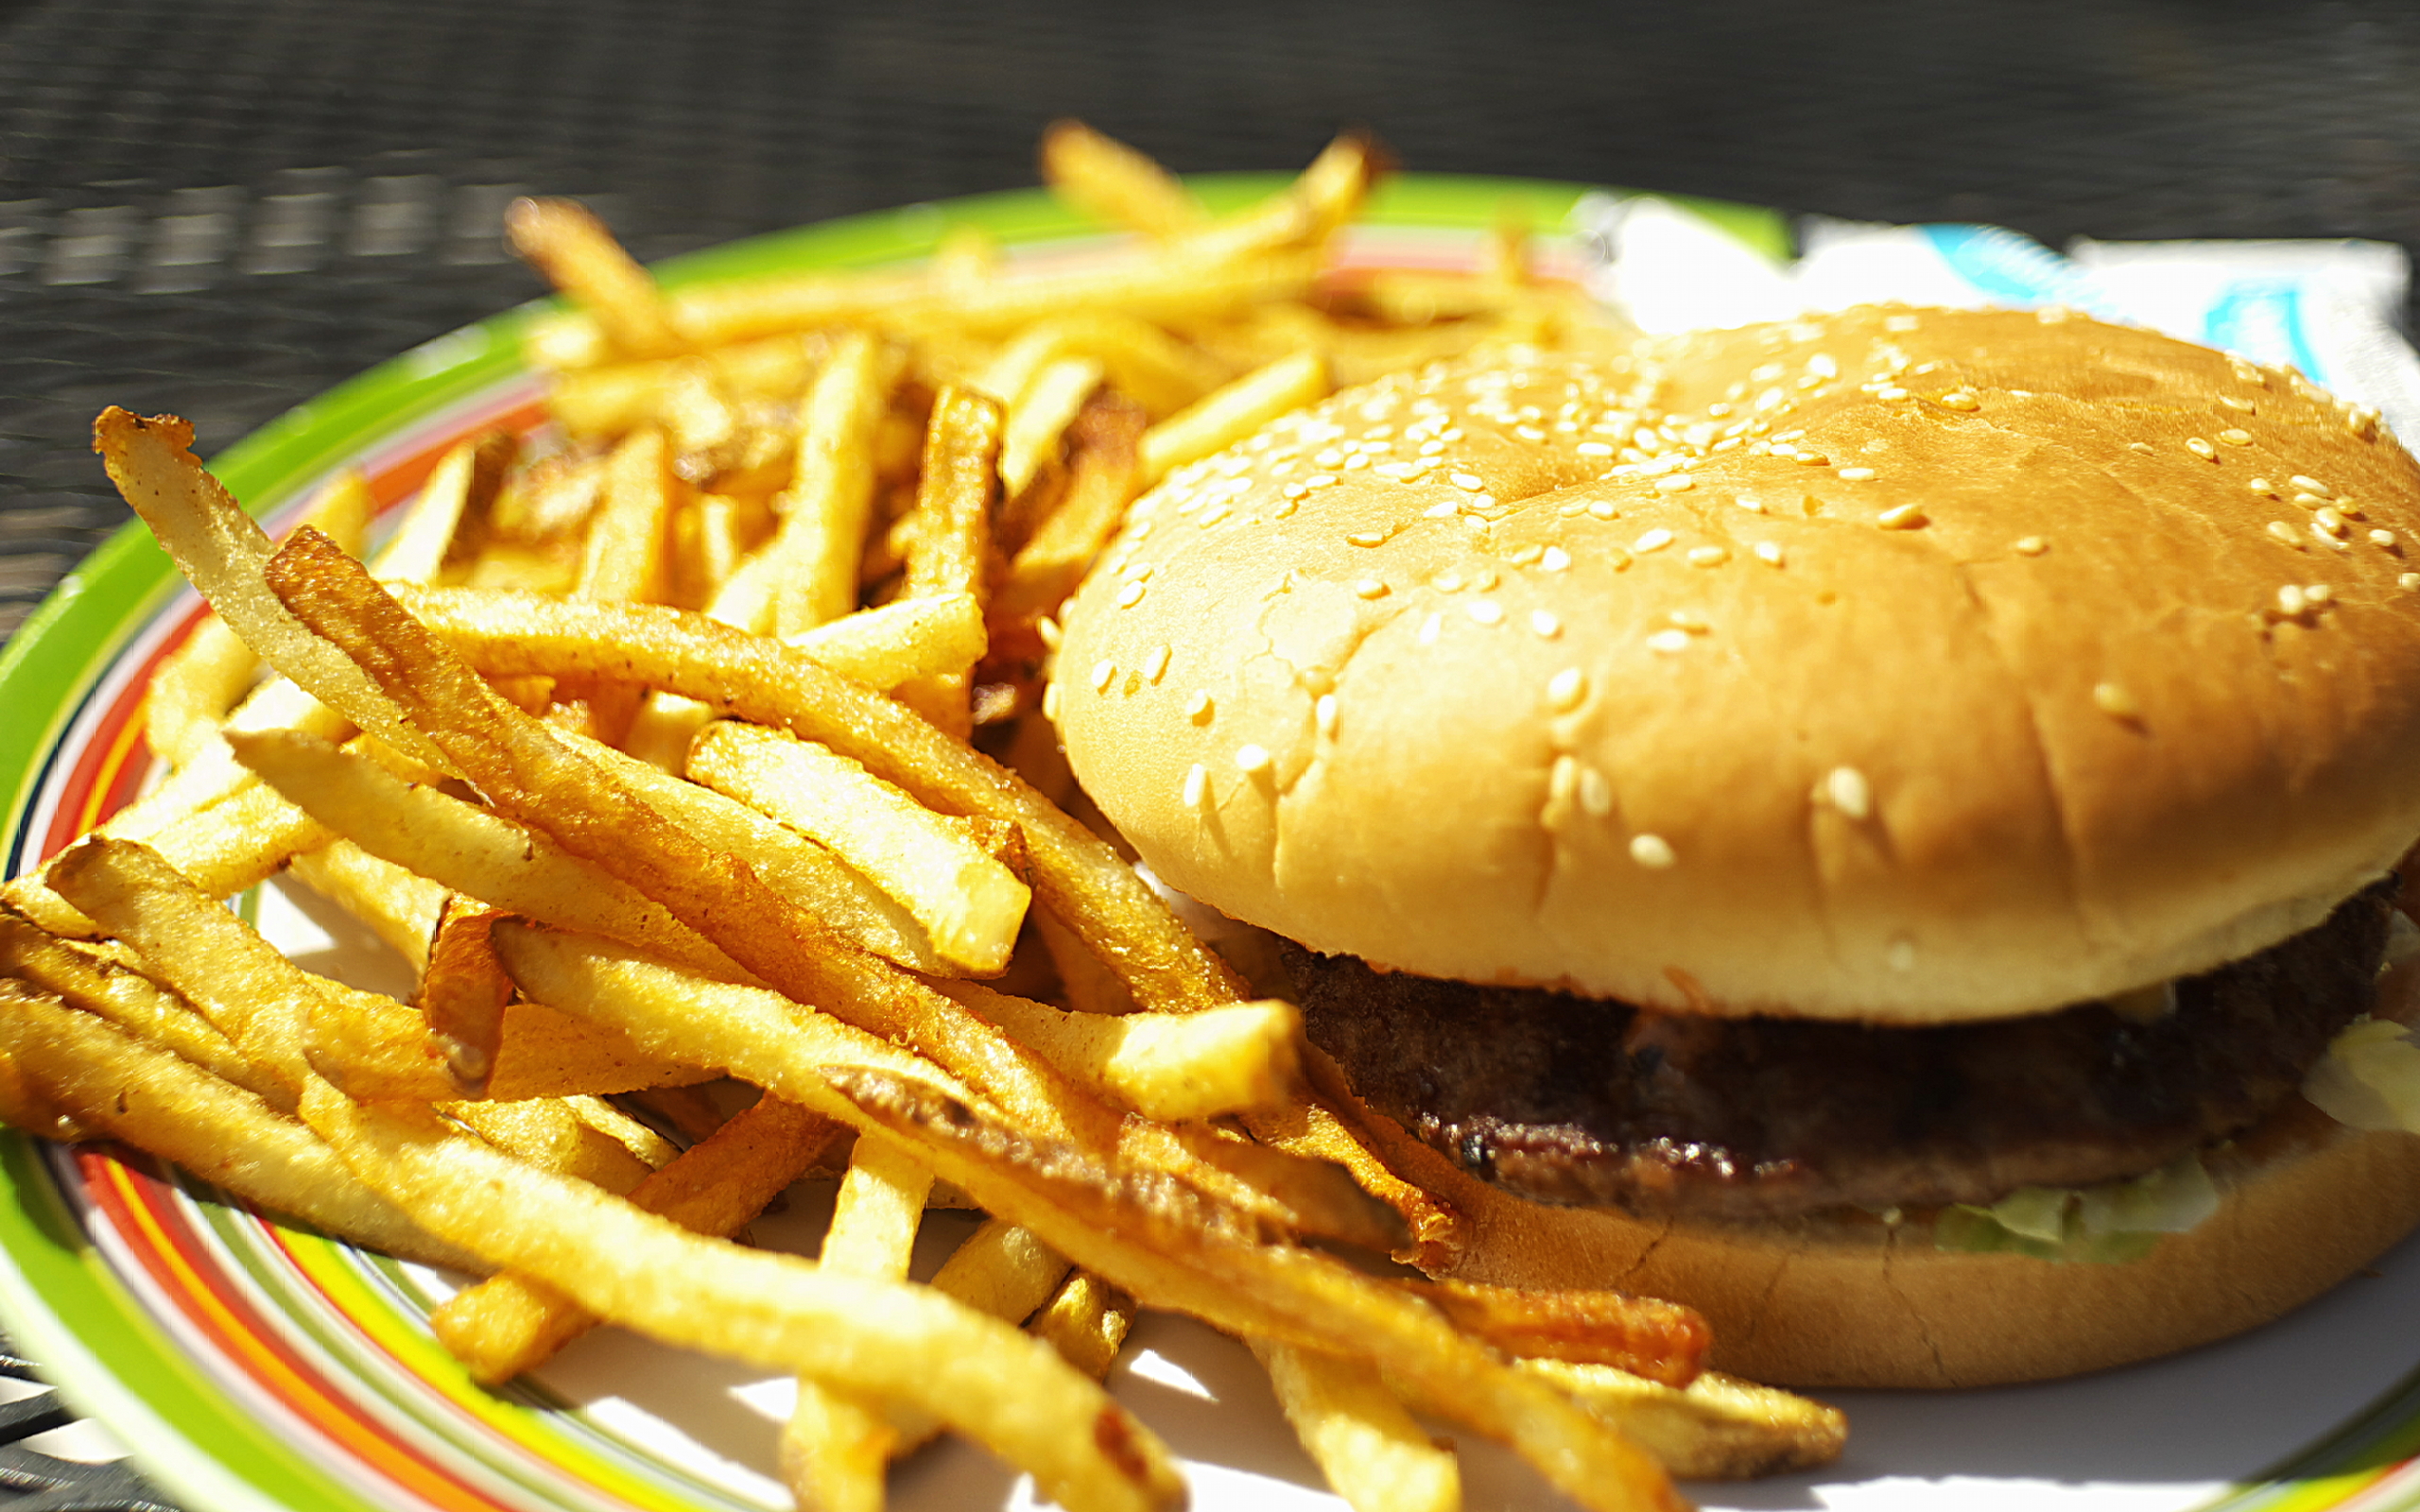 File:Crown Burger Plus hamburger and fries.jpg - Wikimedia Commons